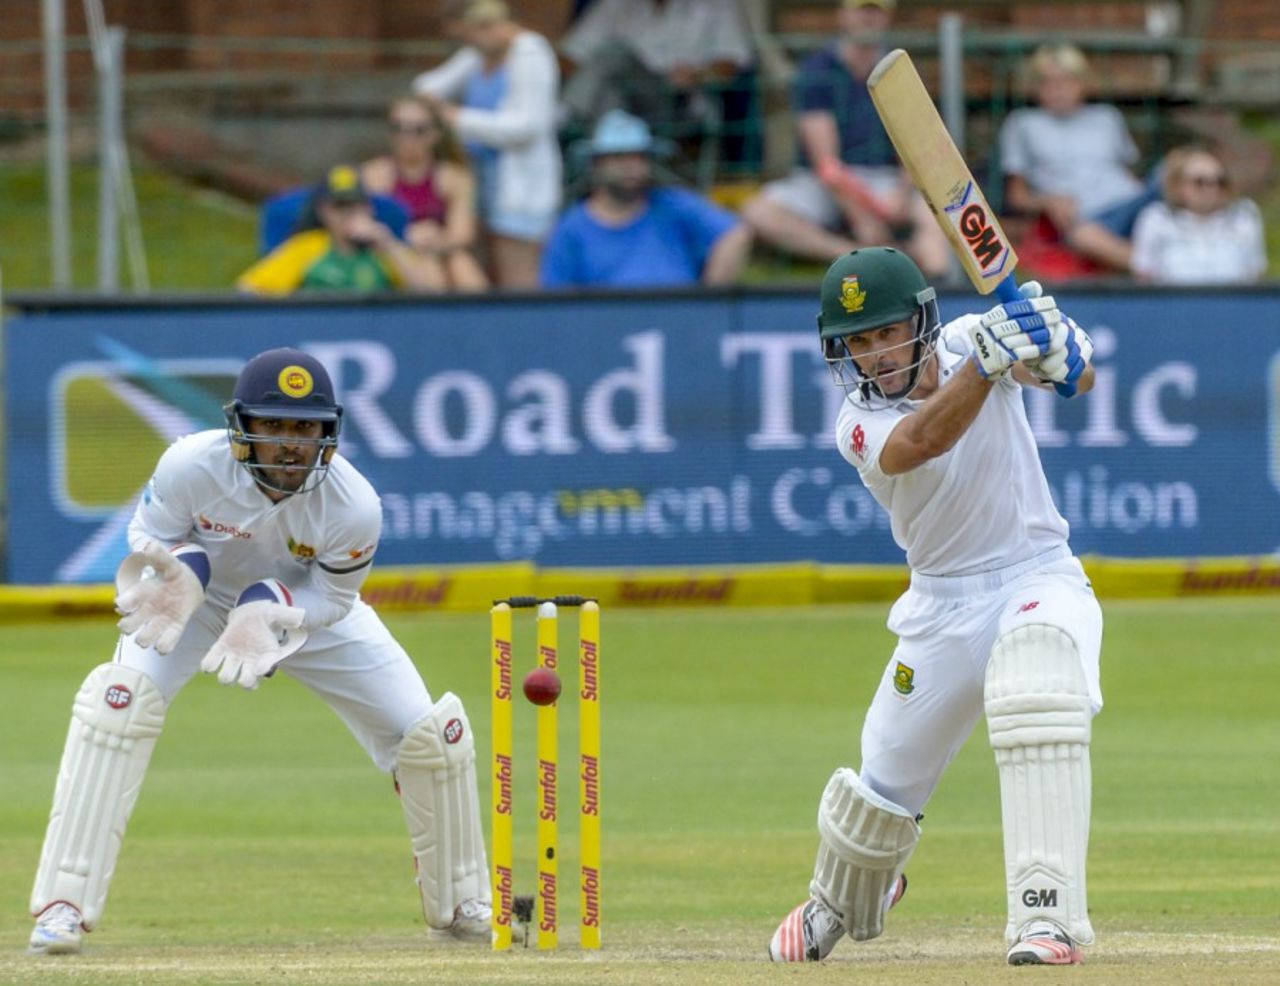 Stephen Cook hammers one through mid-off, South Africa v Sri Lanka, 1st Test, Port Elizabeth, 3rd day, December 28, 2016